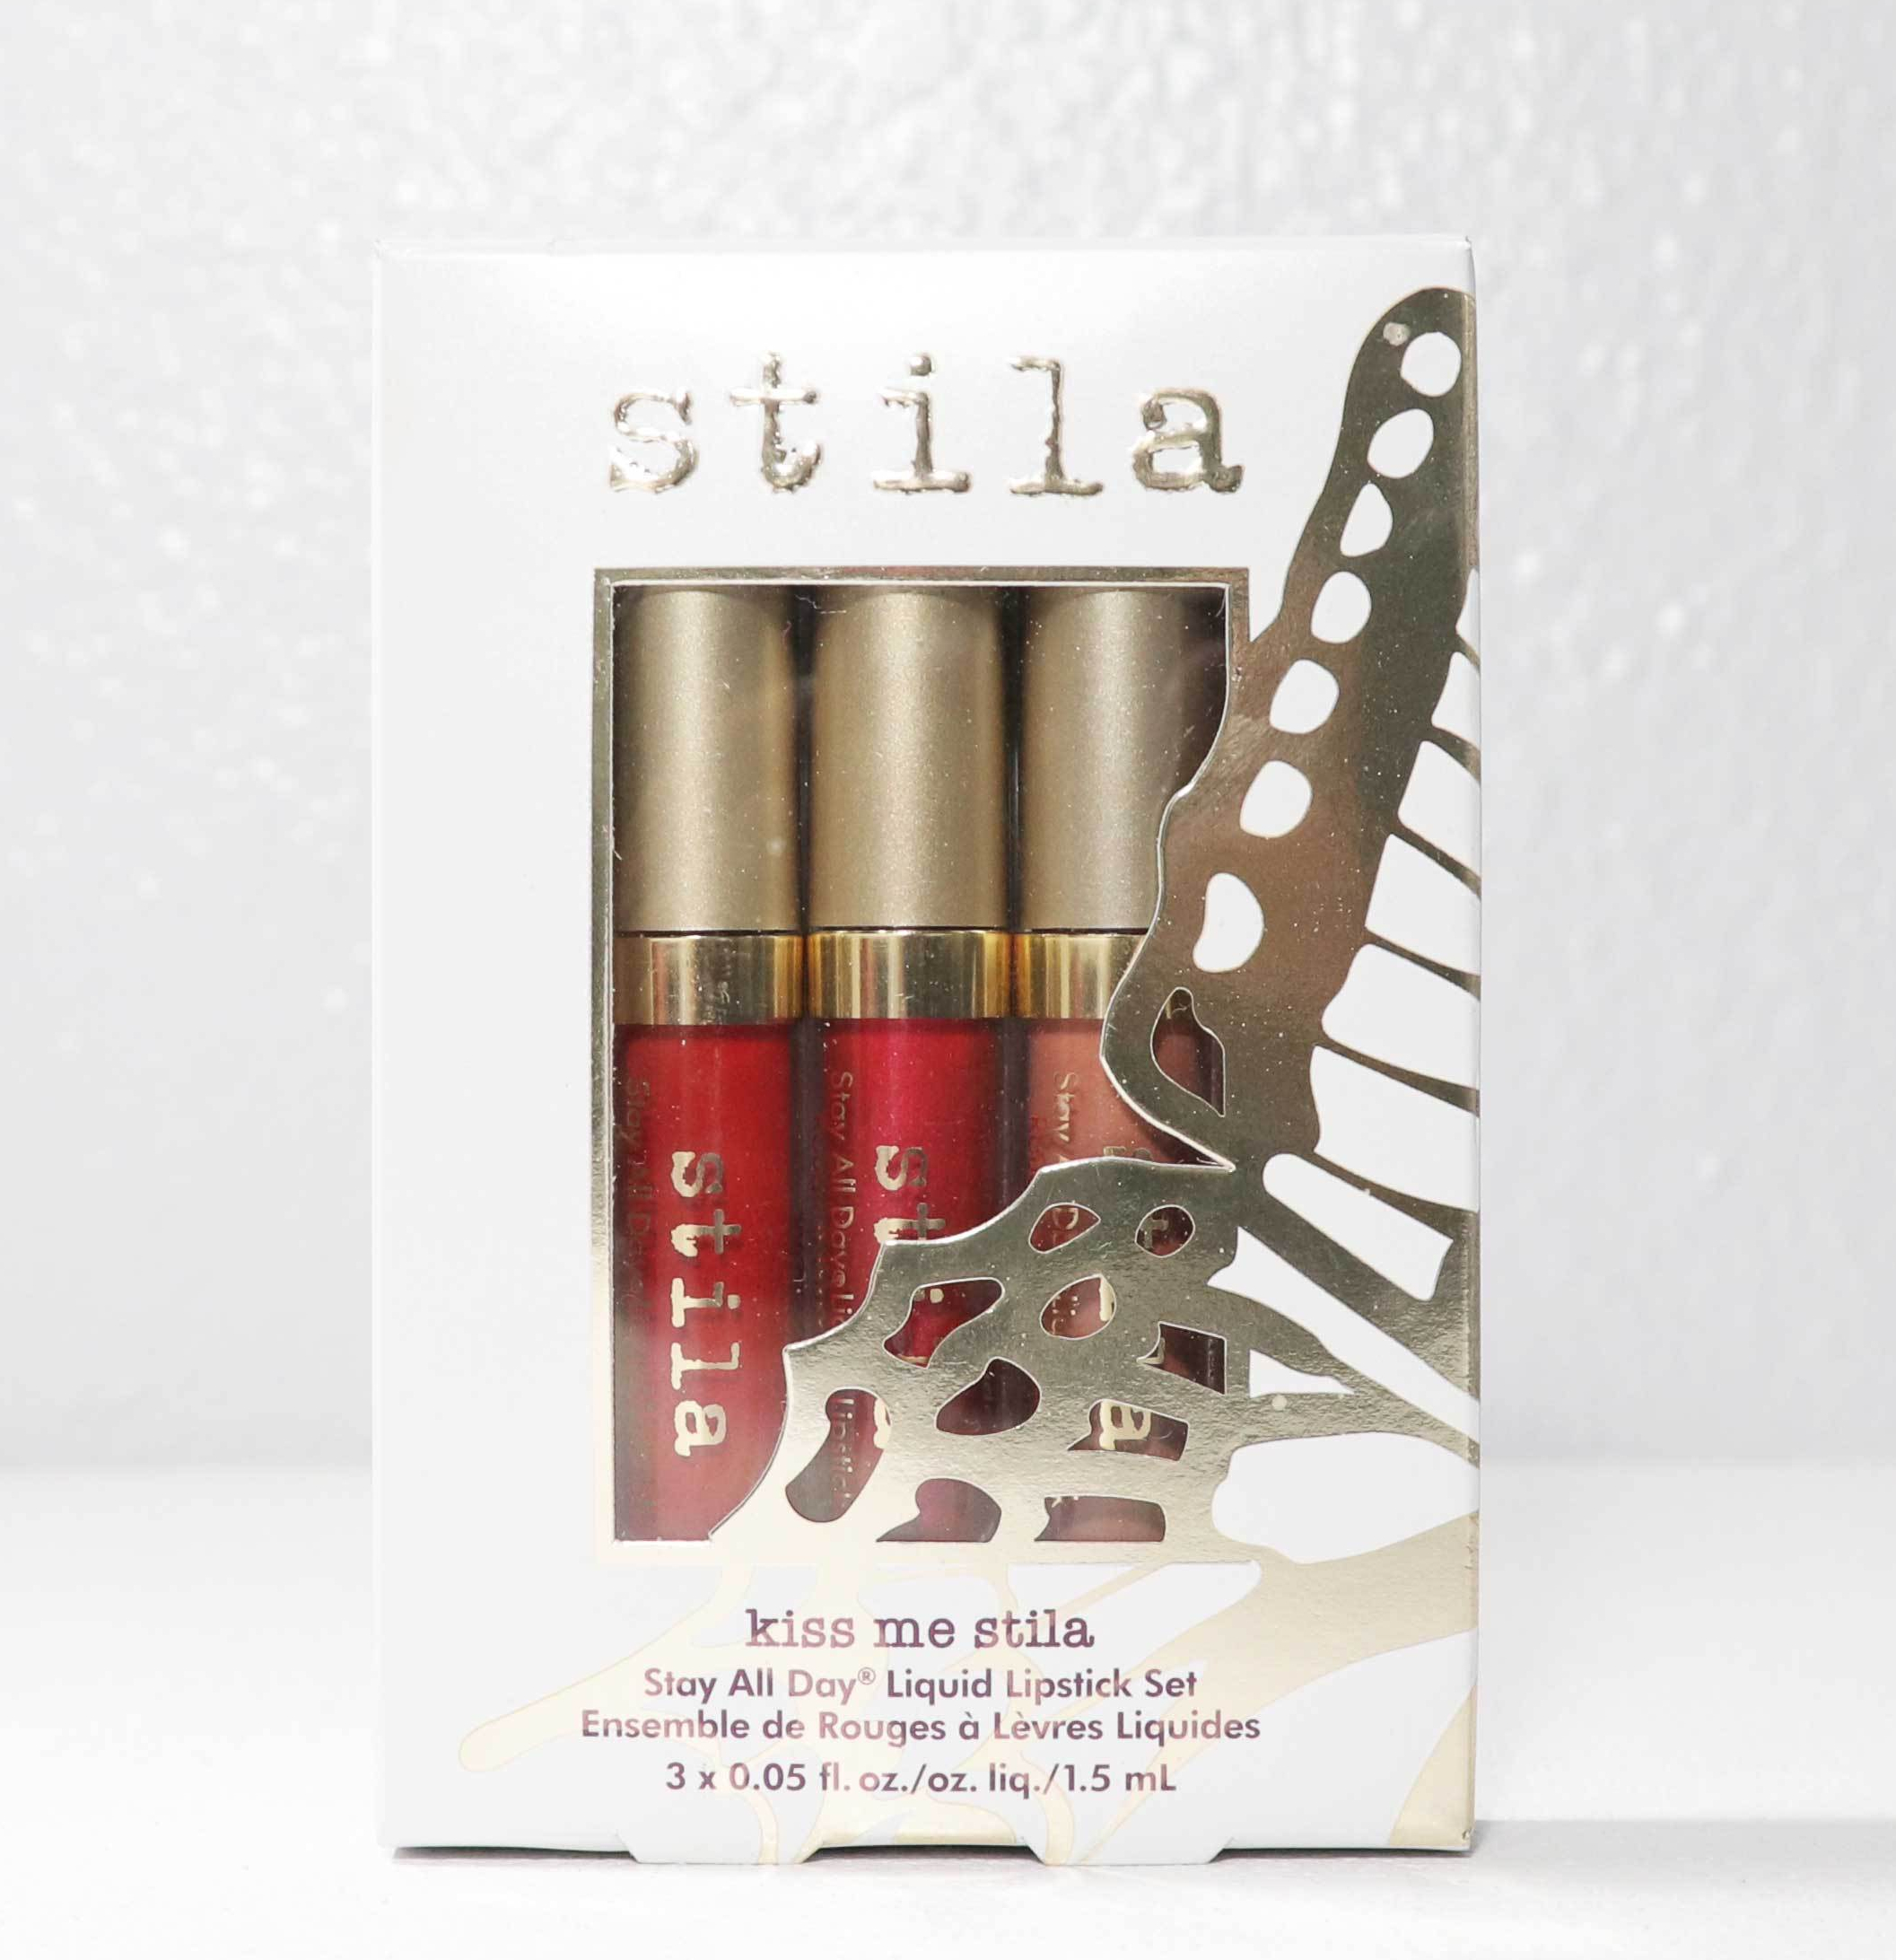 The Stila 'Kiss Me Stila' Stay All Day Liquid Lipstick Set